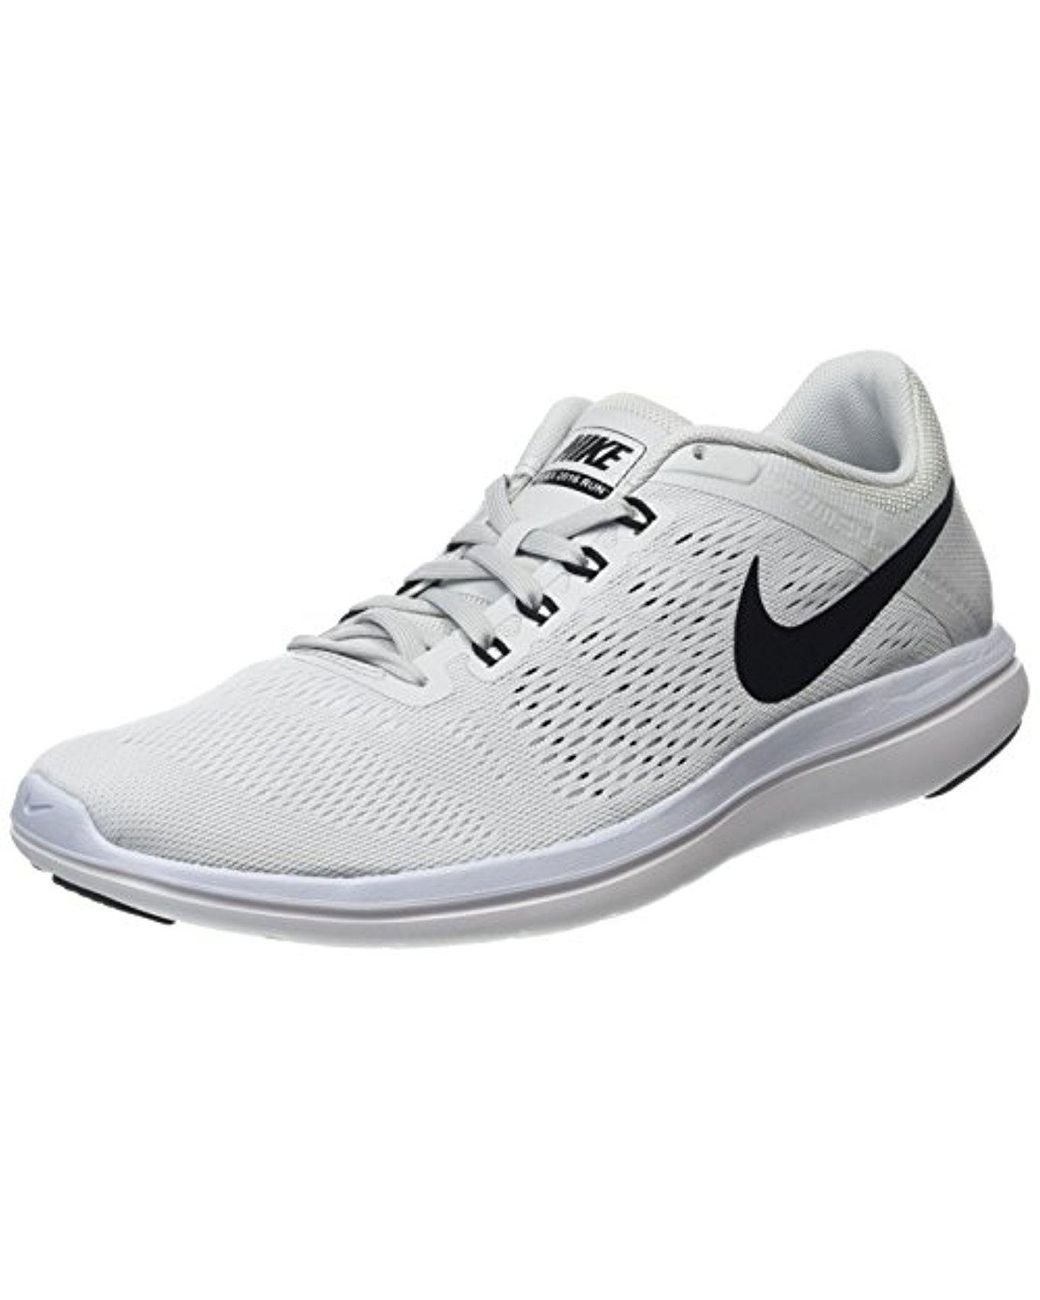 Nike Flex 2016 Rn Running Shoes in White | Lyst